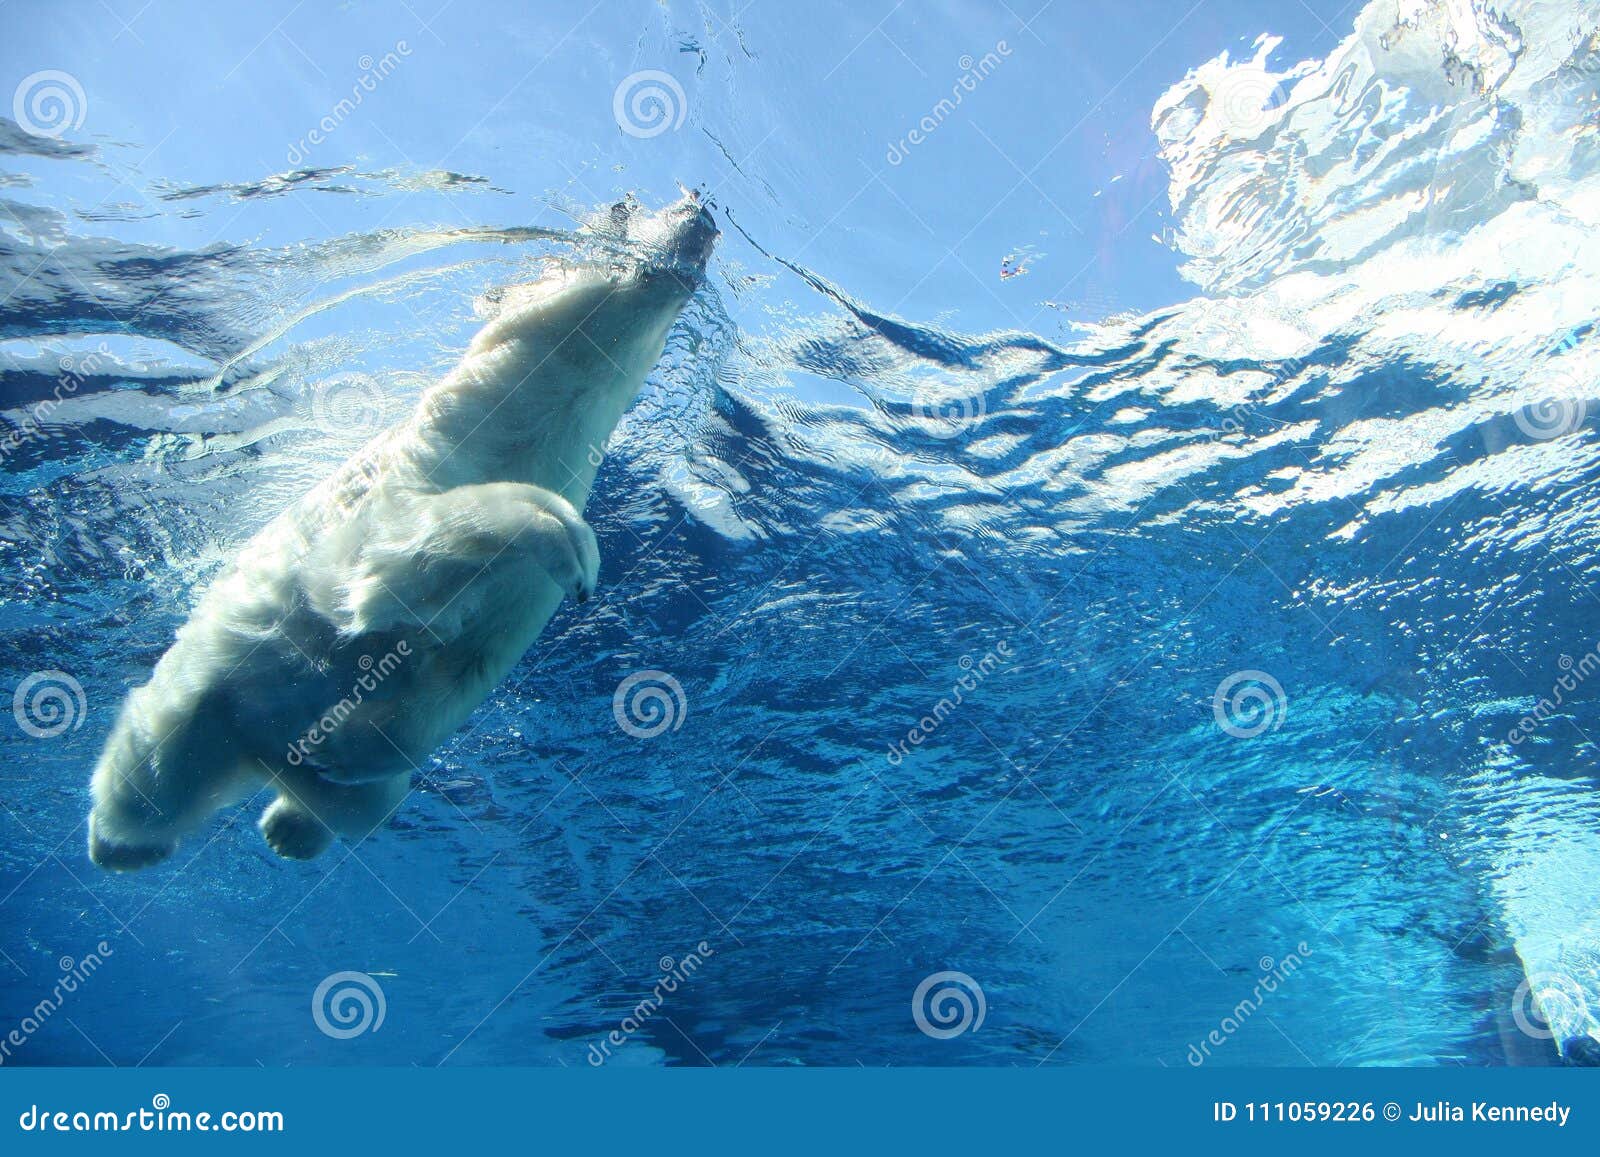 polar bear swimming underwater blue